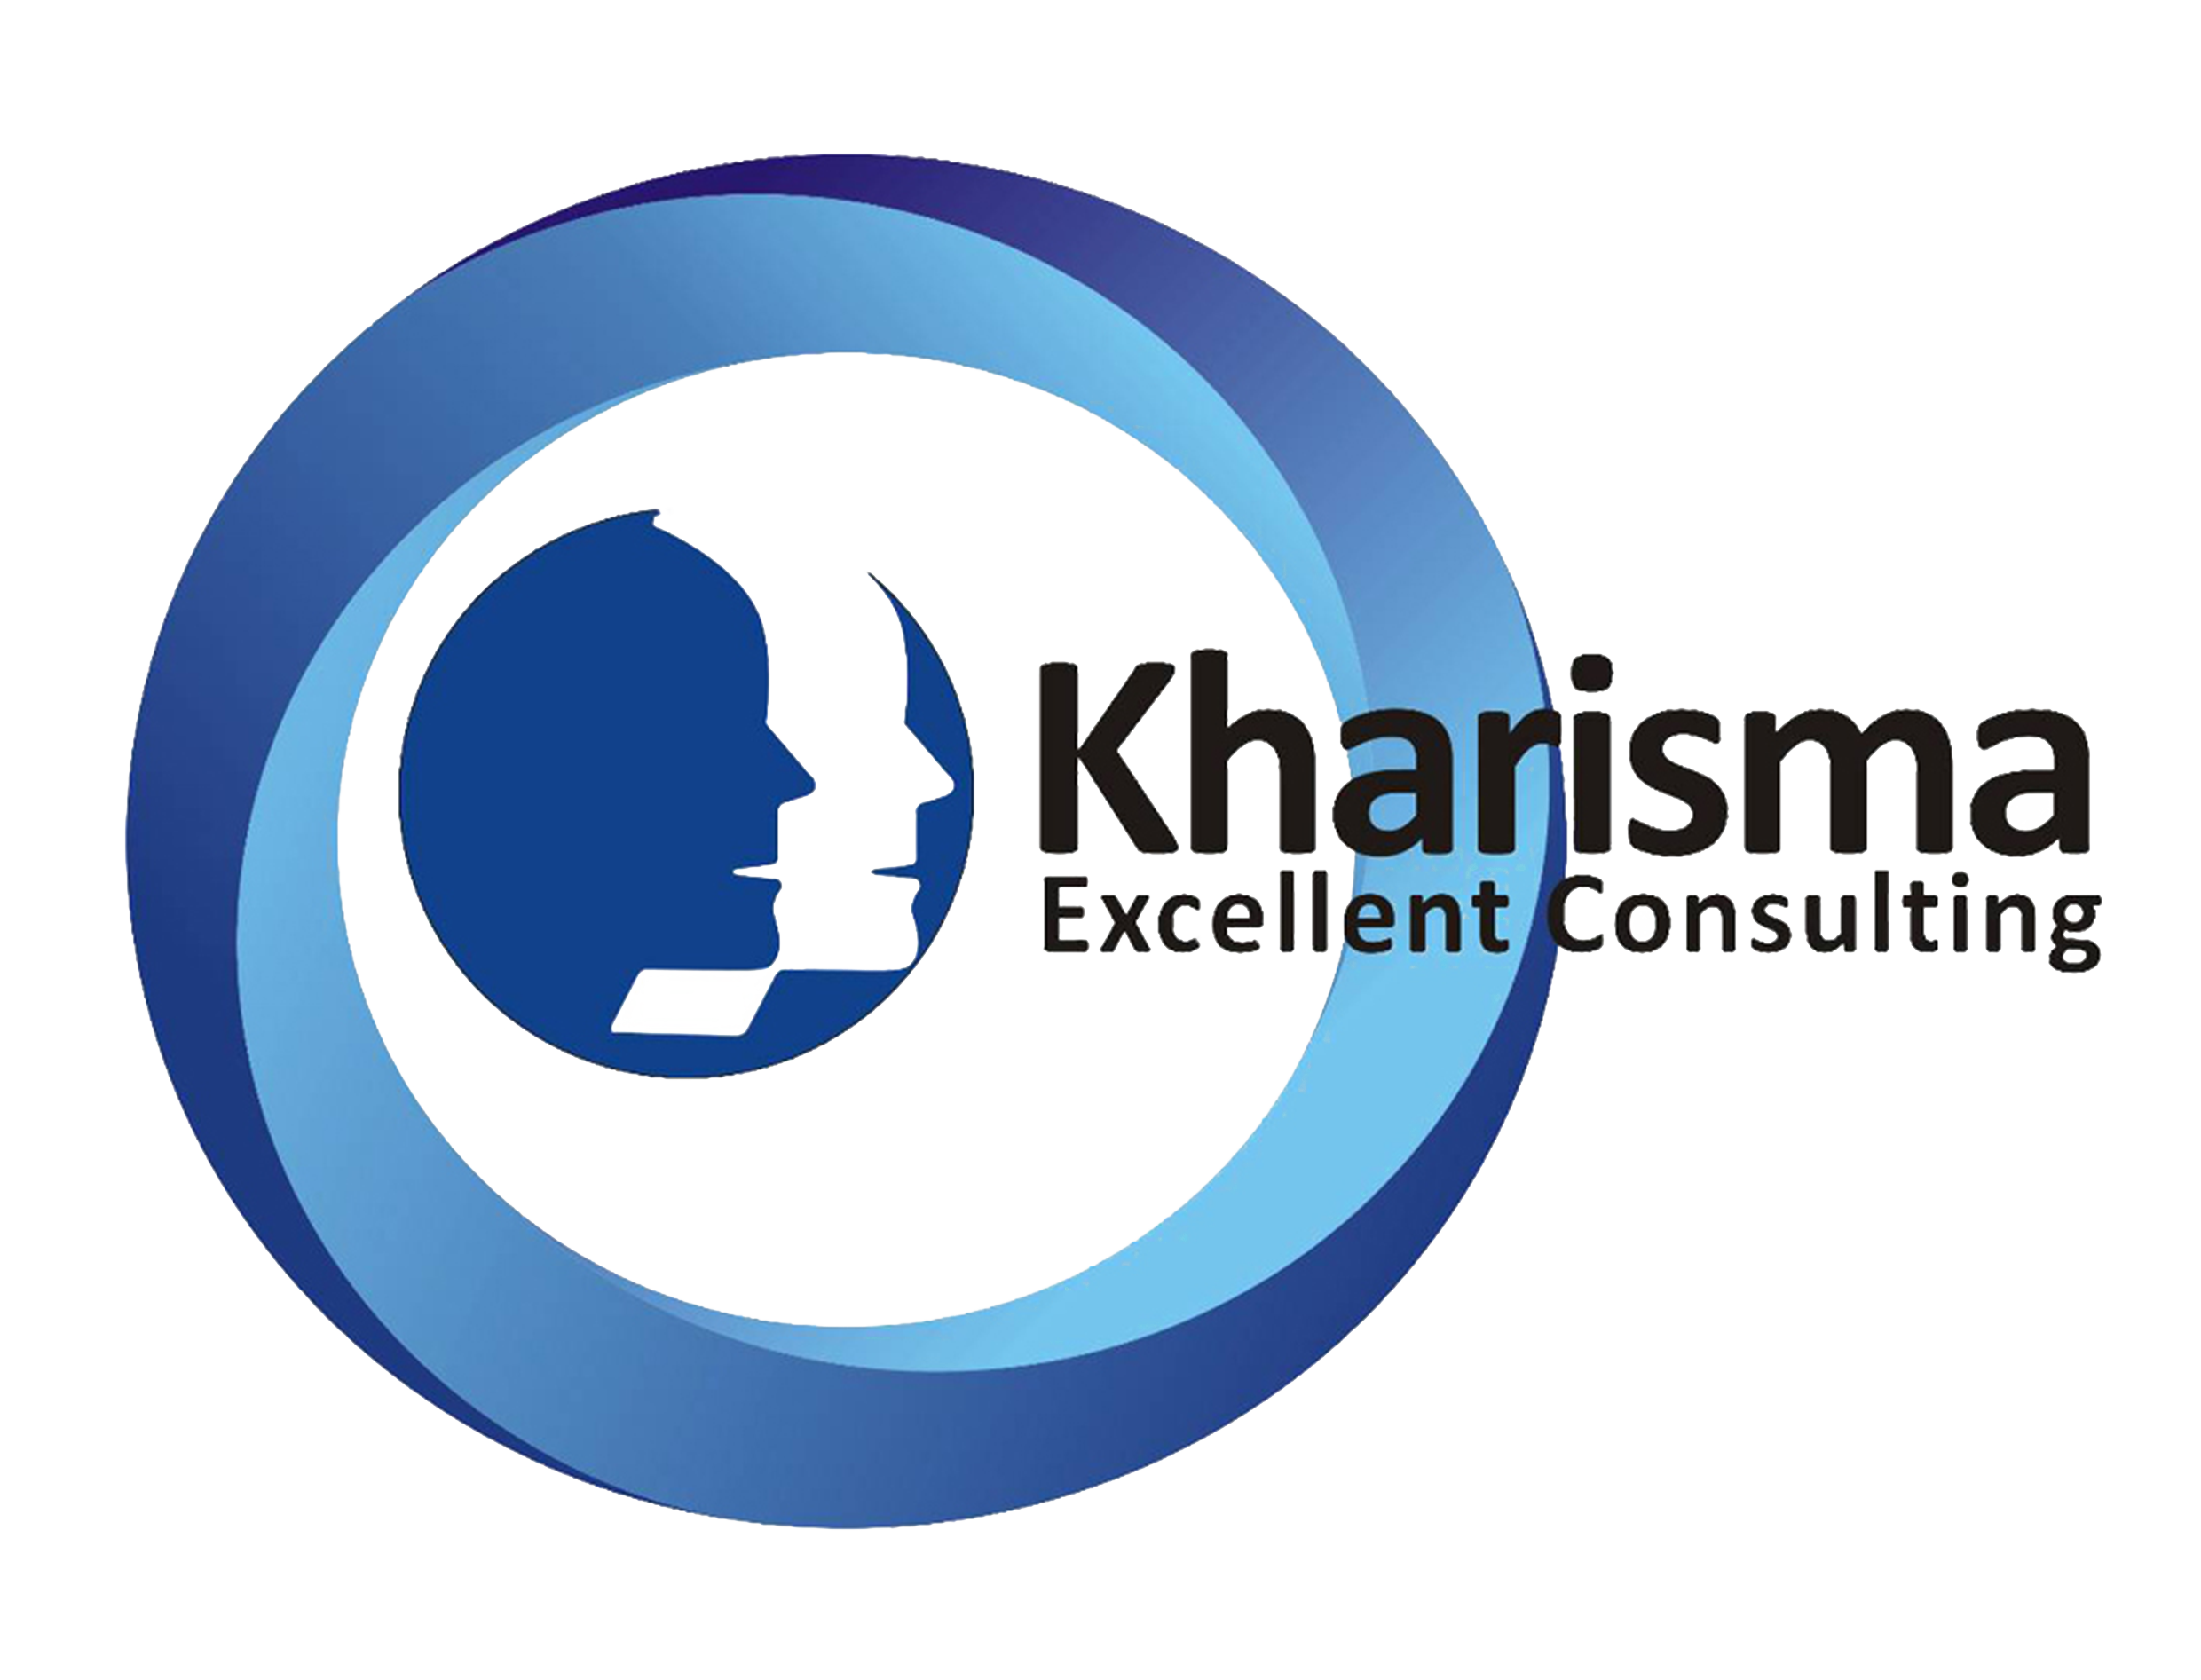 Kharisma Excellent Consulting